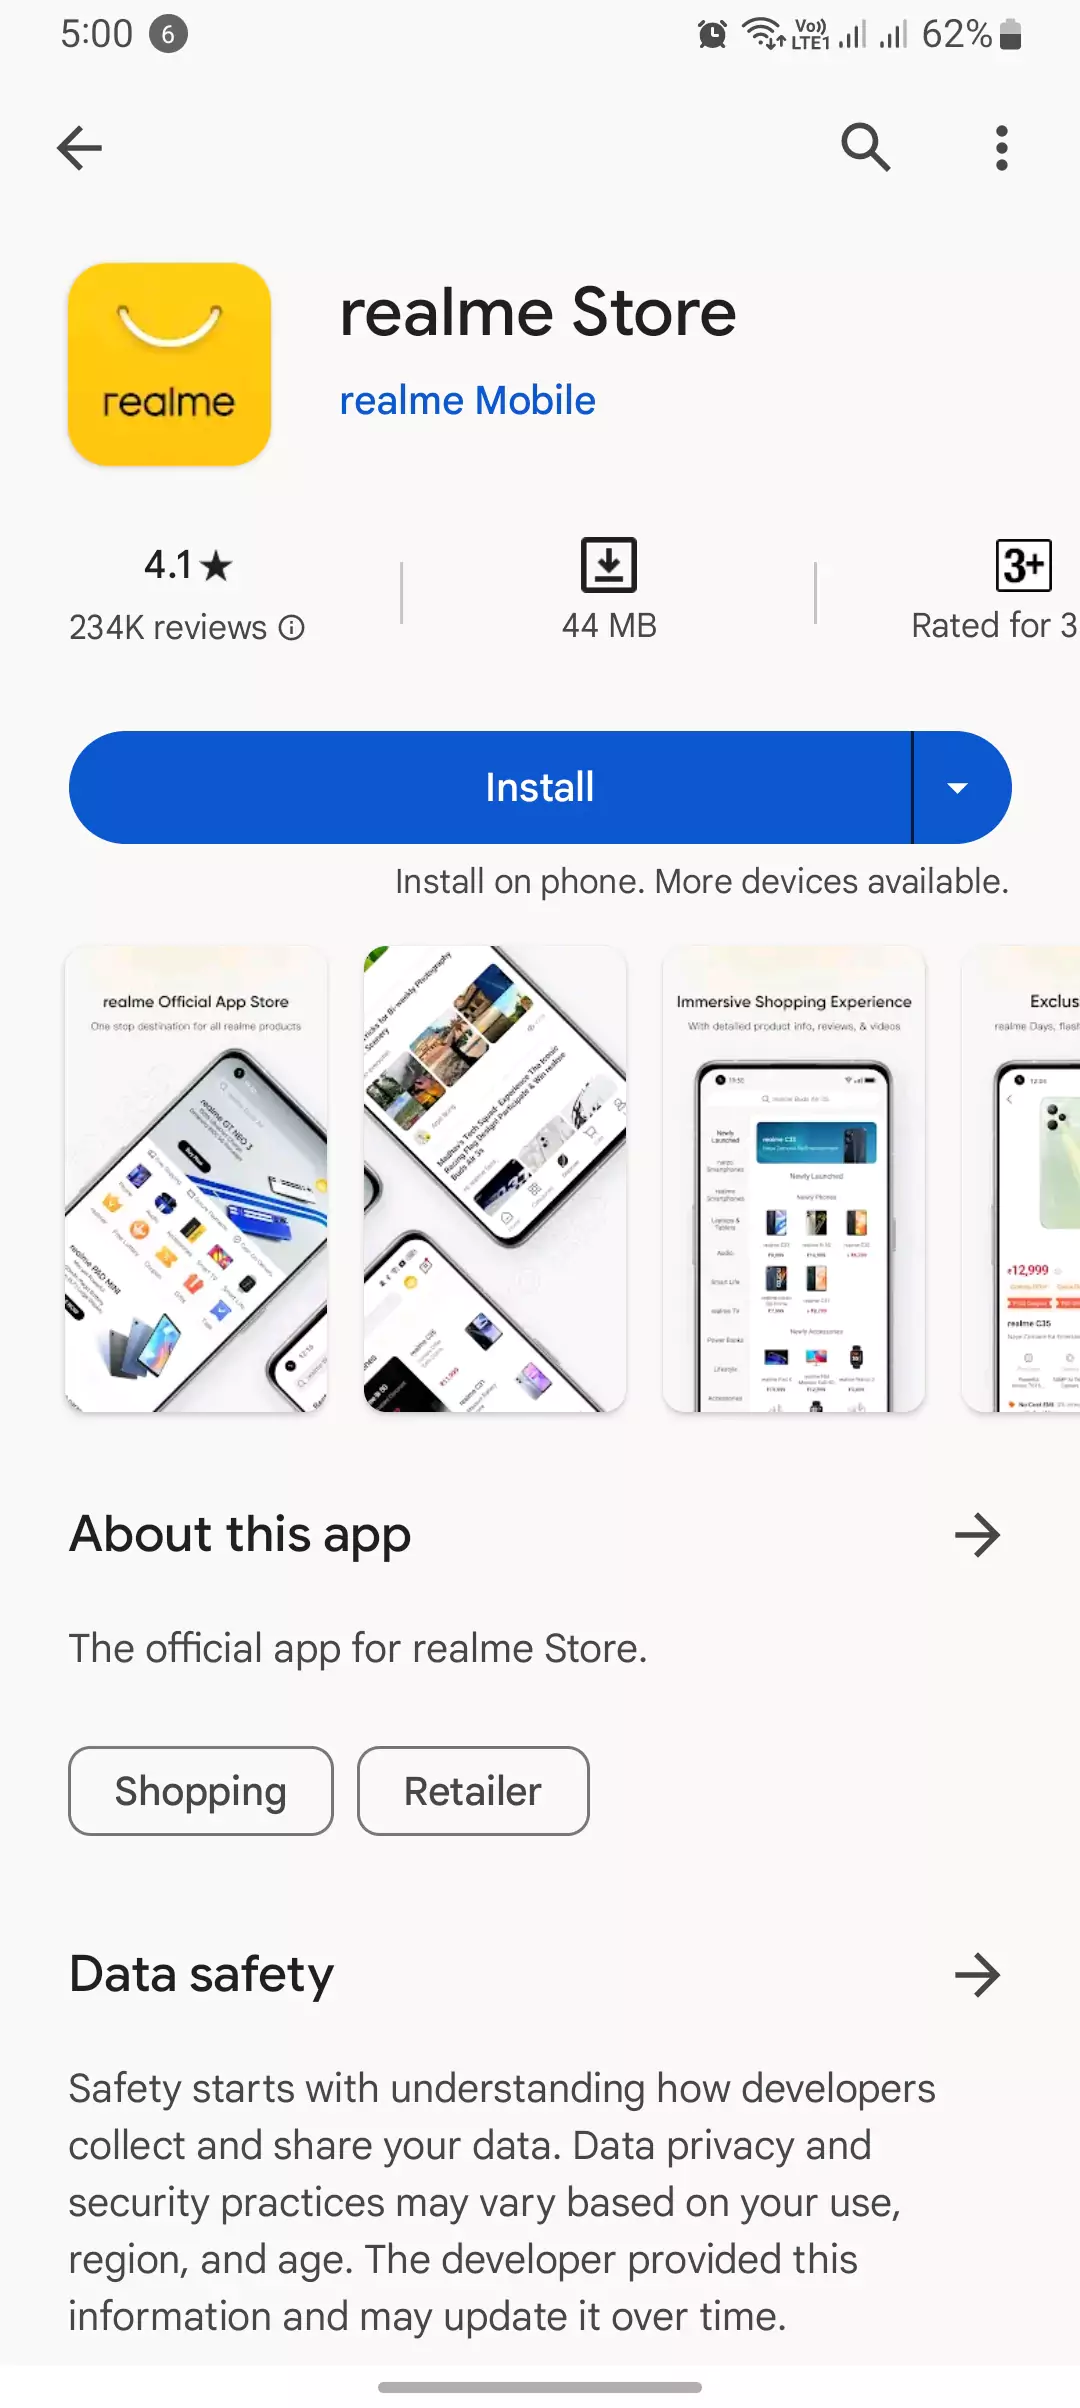 realme store app screenshot from google play